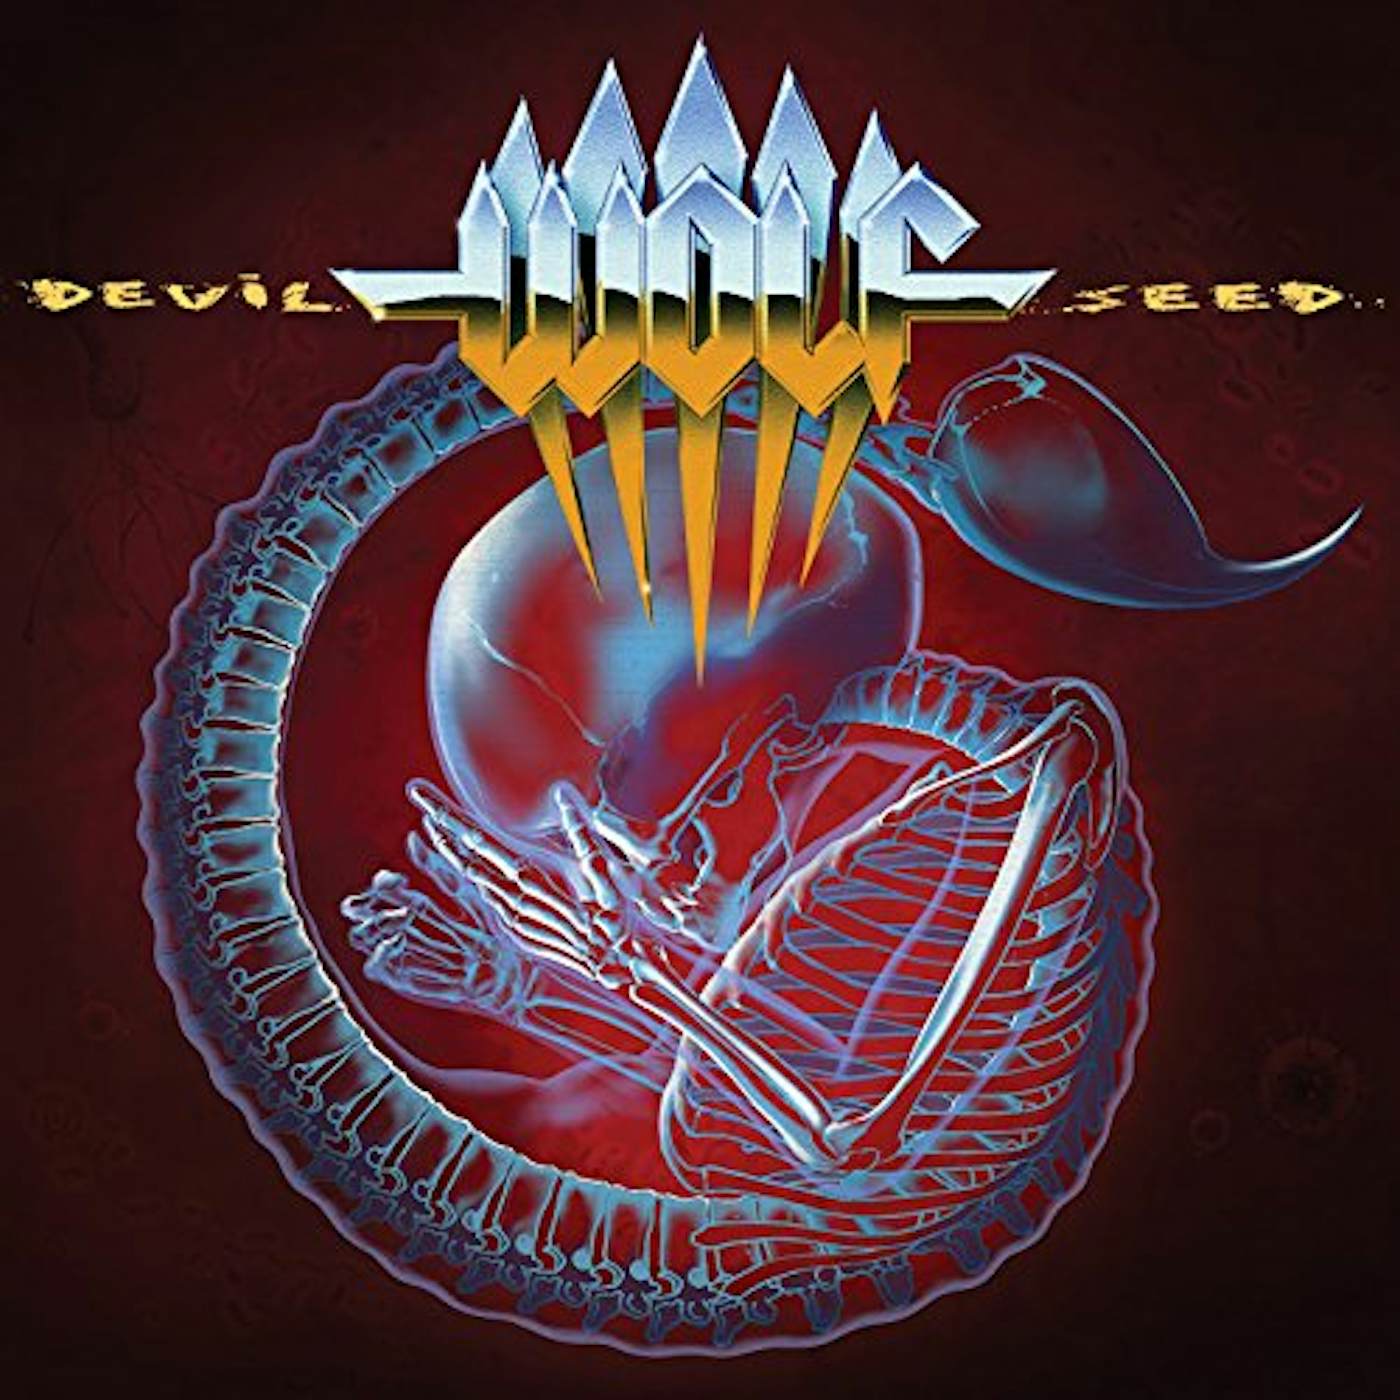 Wolf DEVIL SEED Vinyl Record - UK Release